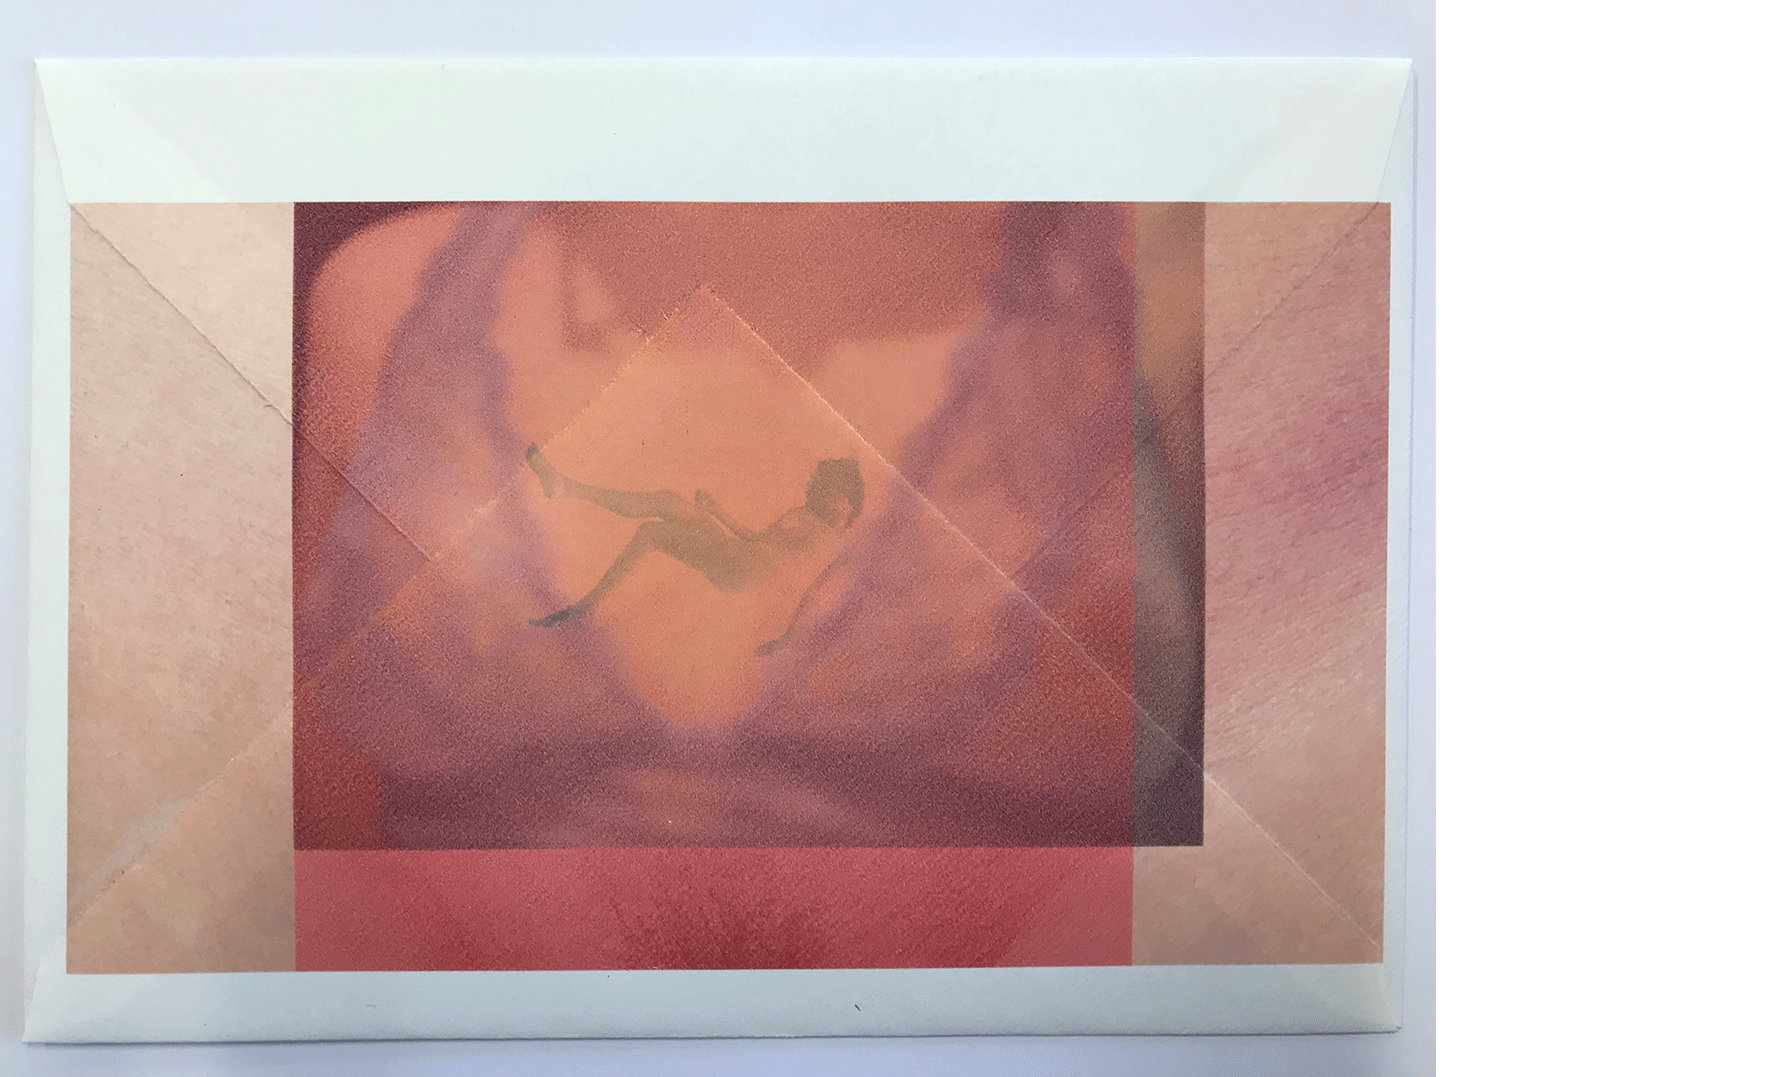   Falling in (2020) Loïc Martin   Inkjet print on envelope (6,4 x 9 x 0,1 inches / 16,2 x 22,9 x 0,2 cm)  Edition of 10 &amp; 1 AP 